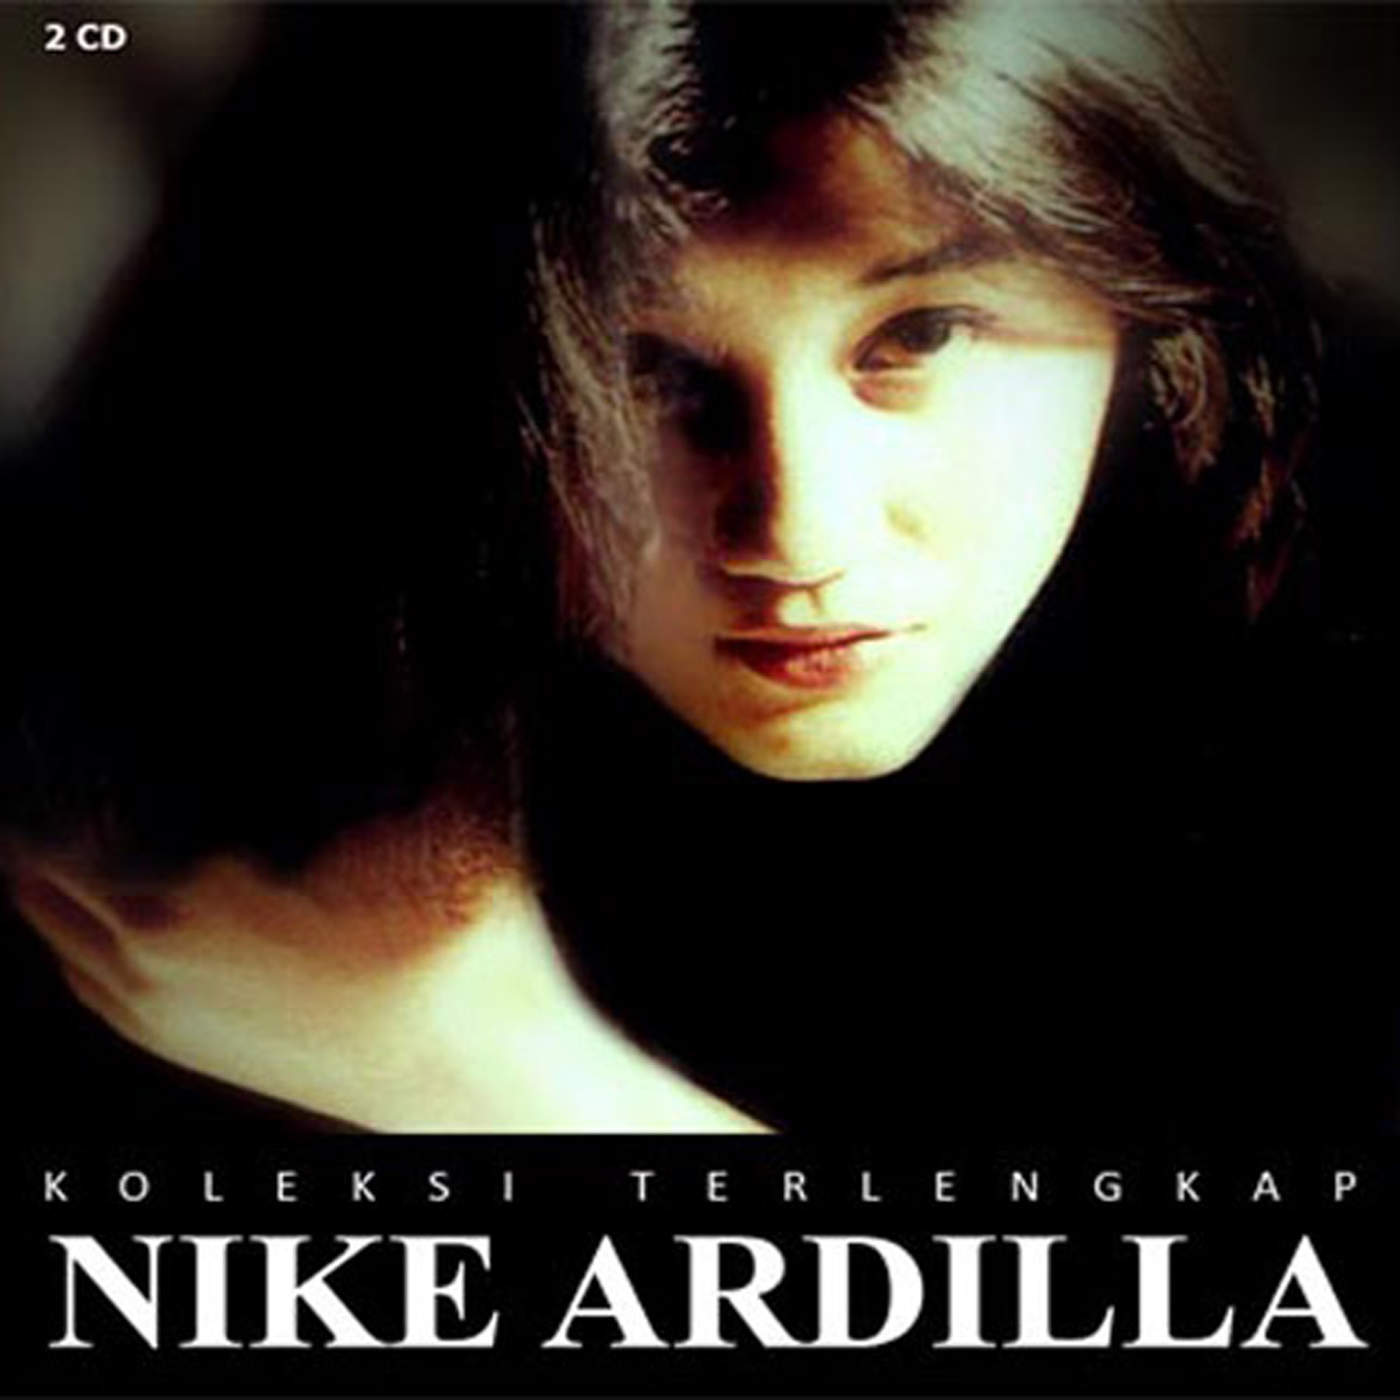  Nike  Ardilla  Koleksi Terlengkap Album  2009 iTunes 